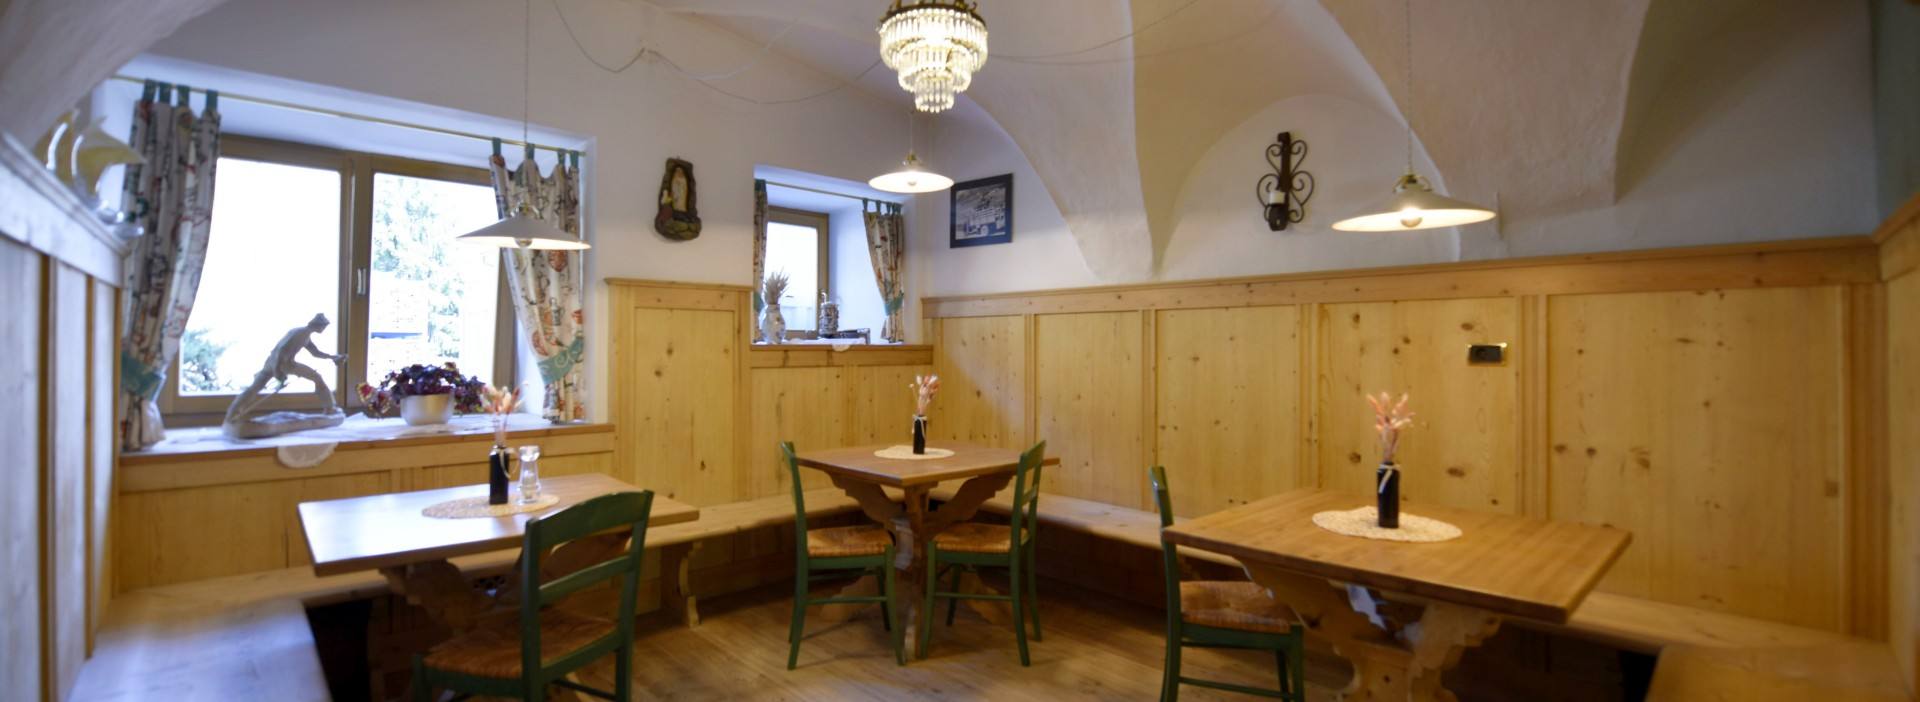 Restaurant Alp Cron Moarhof